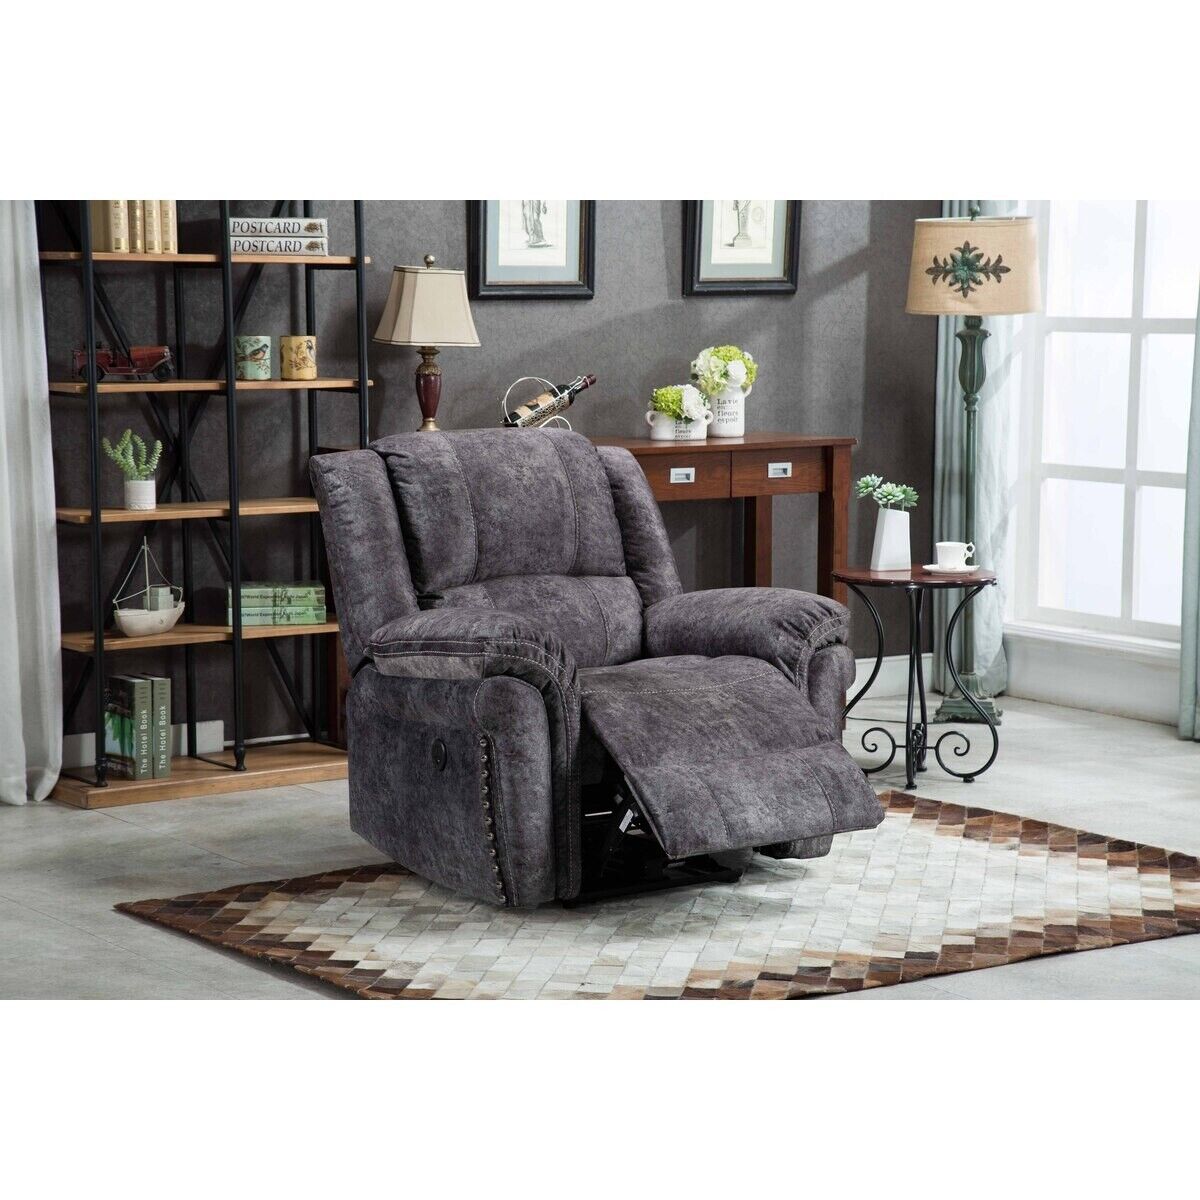 Esofastore Fabric Upholstered Power Recliner Armchair w/ USB Port & Plush Pillow Back Cushion, Adjustable Living Room Sofa Chair, Gray